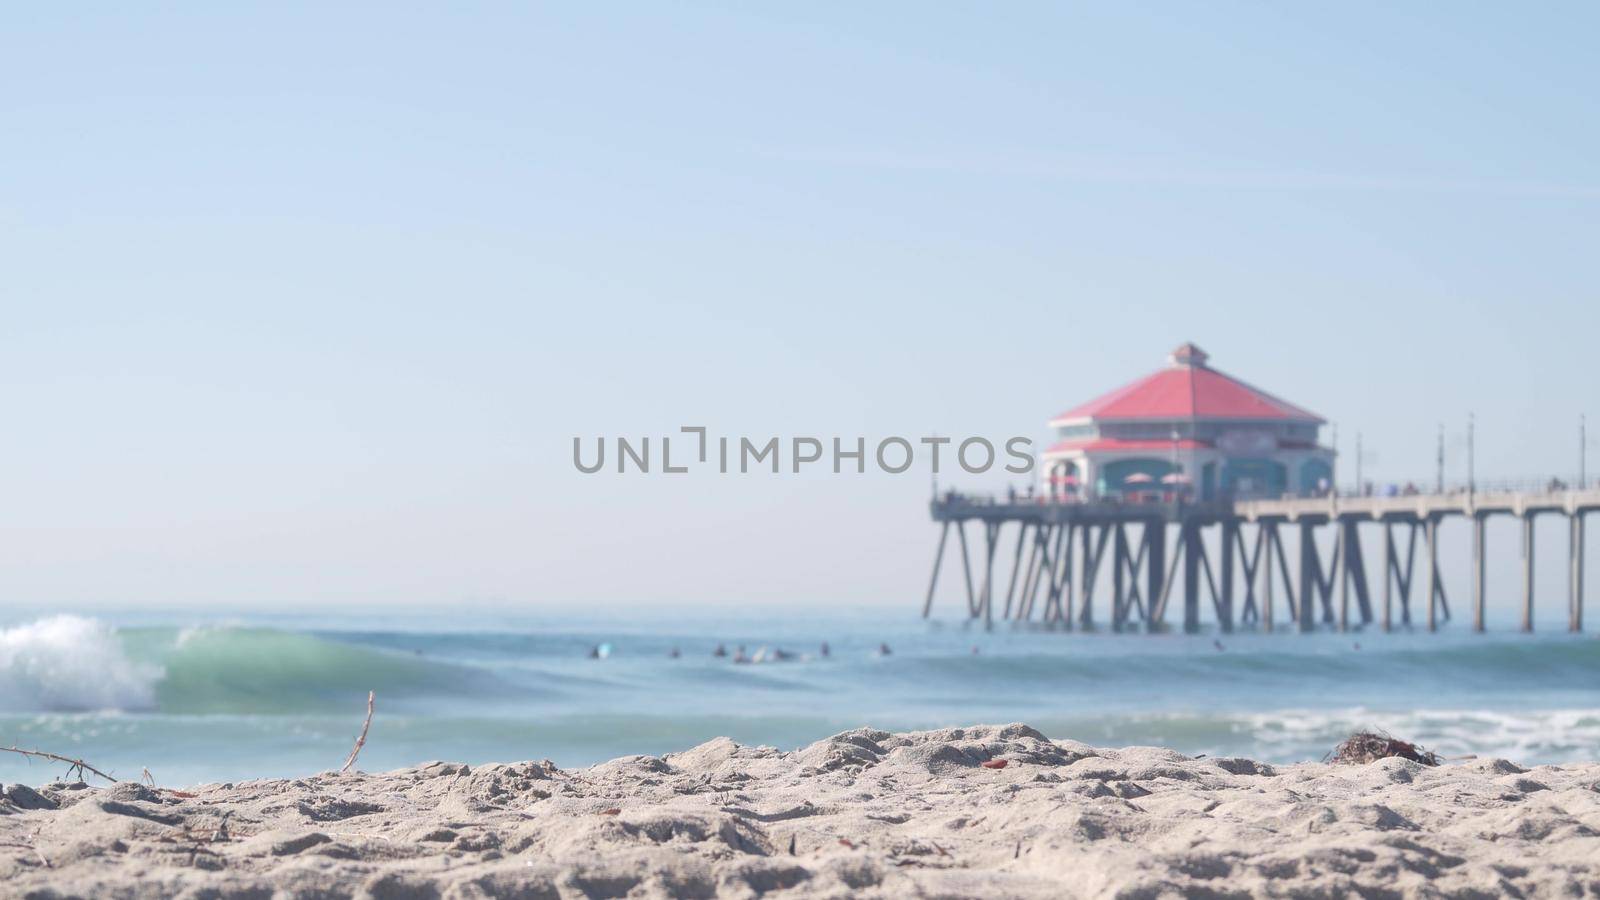 Retro huntington pier, surfing in ocean waves and beach, California coast, USA. by DogoraSun